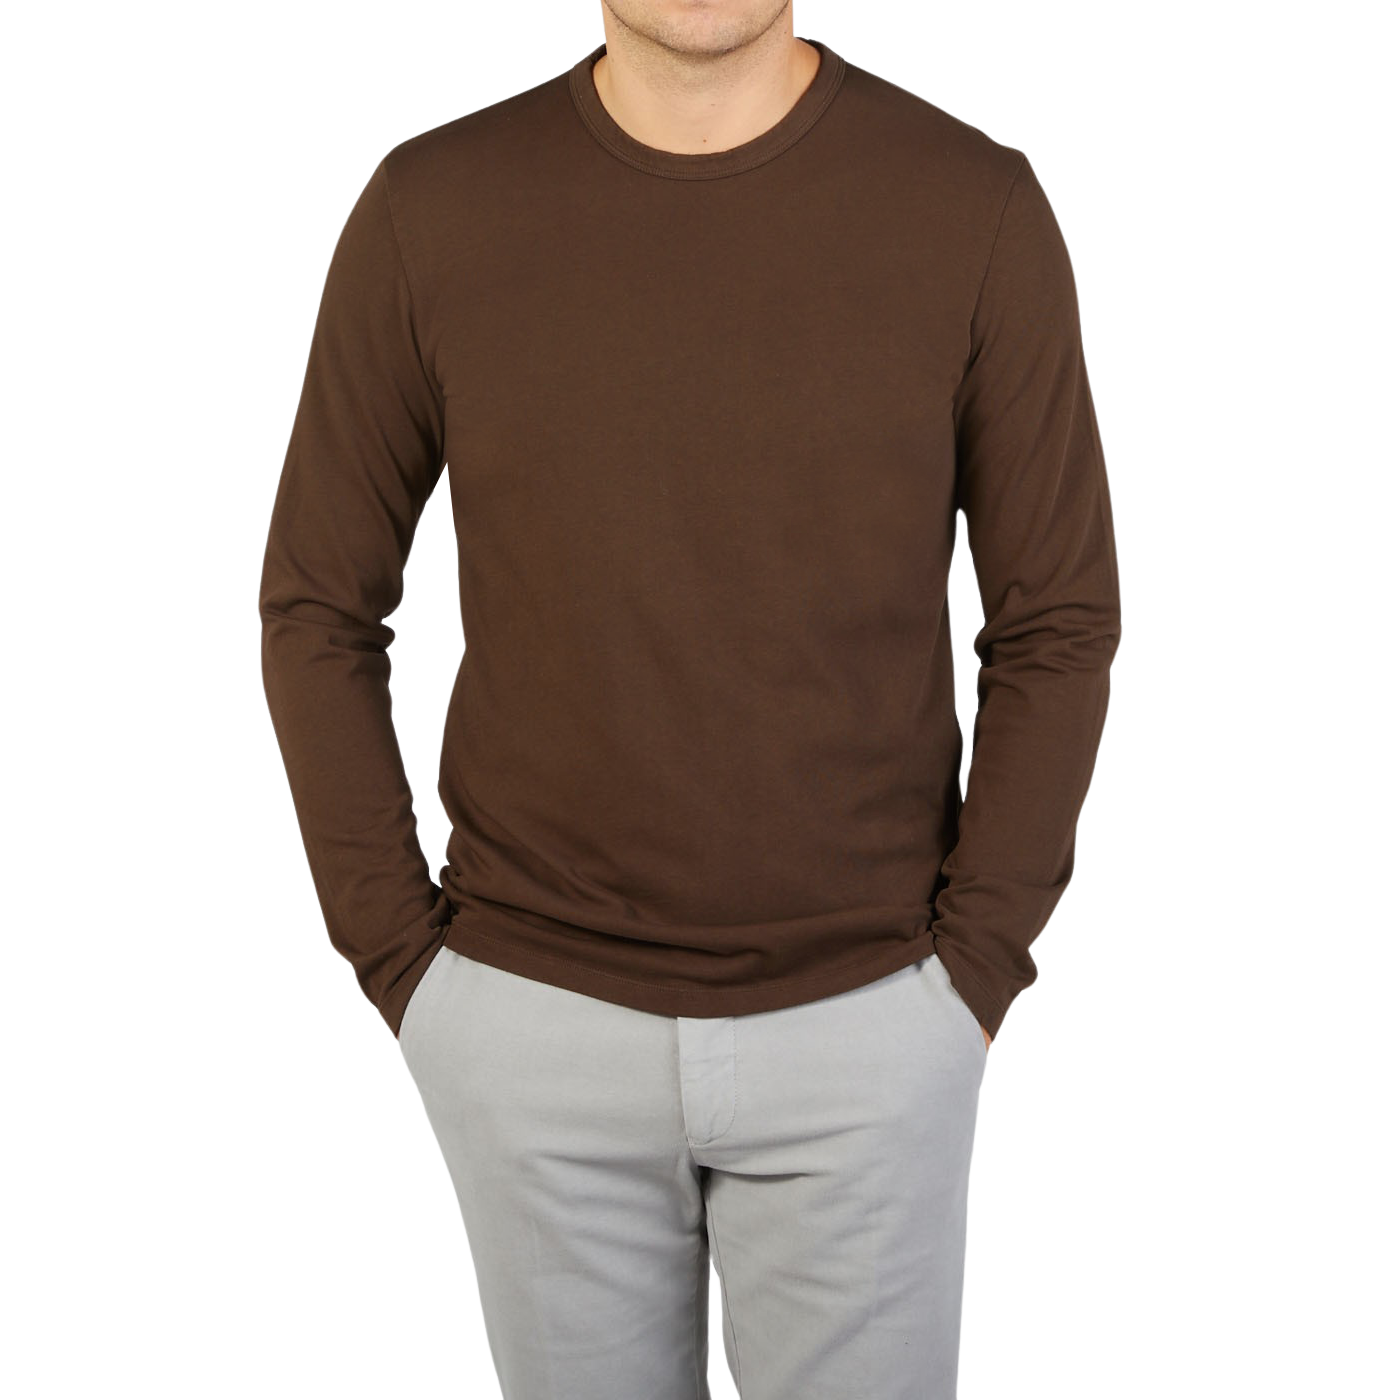 A man wearing a Tela Genova Dark Brown Organic Cotton LS T-Shirt.